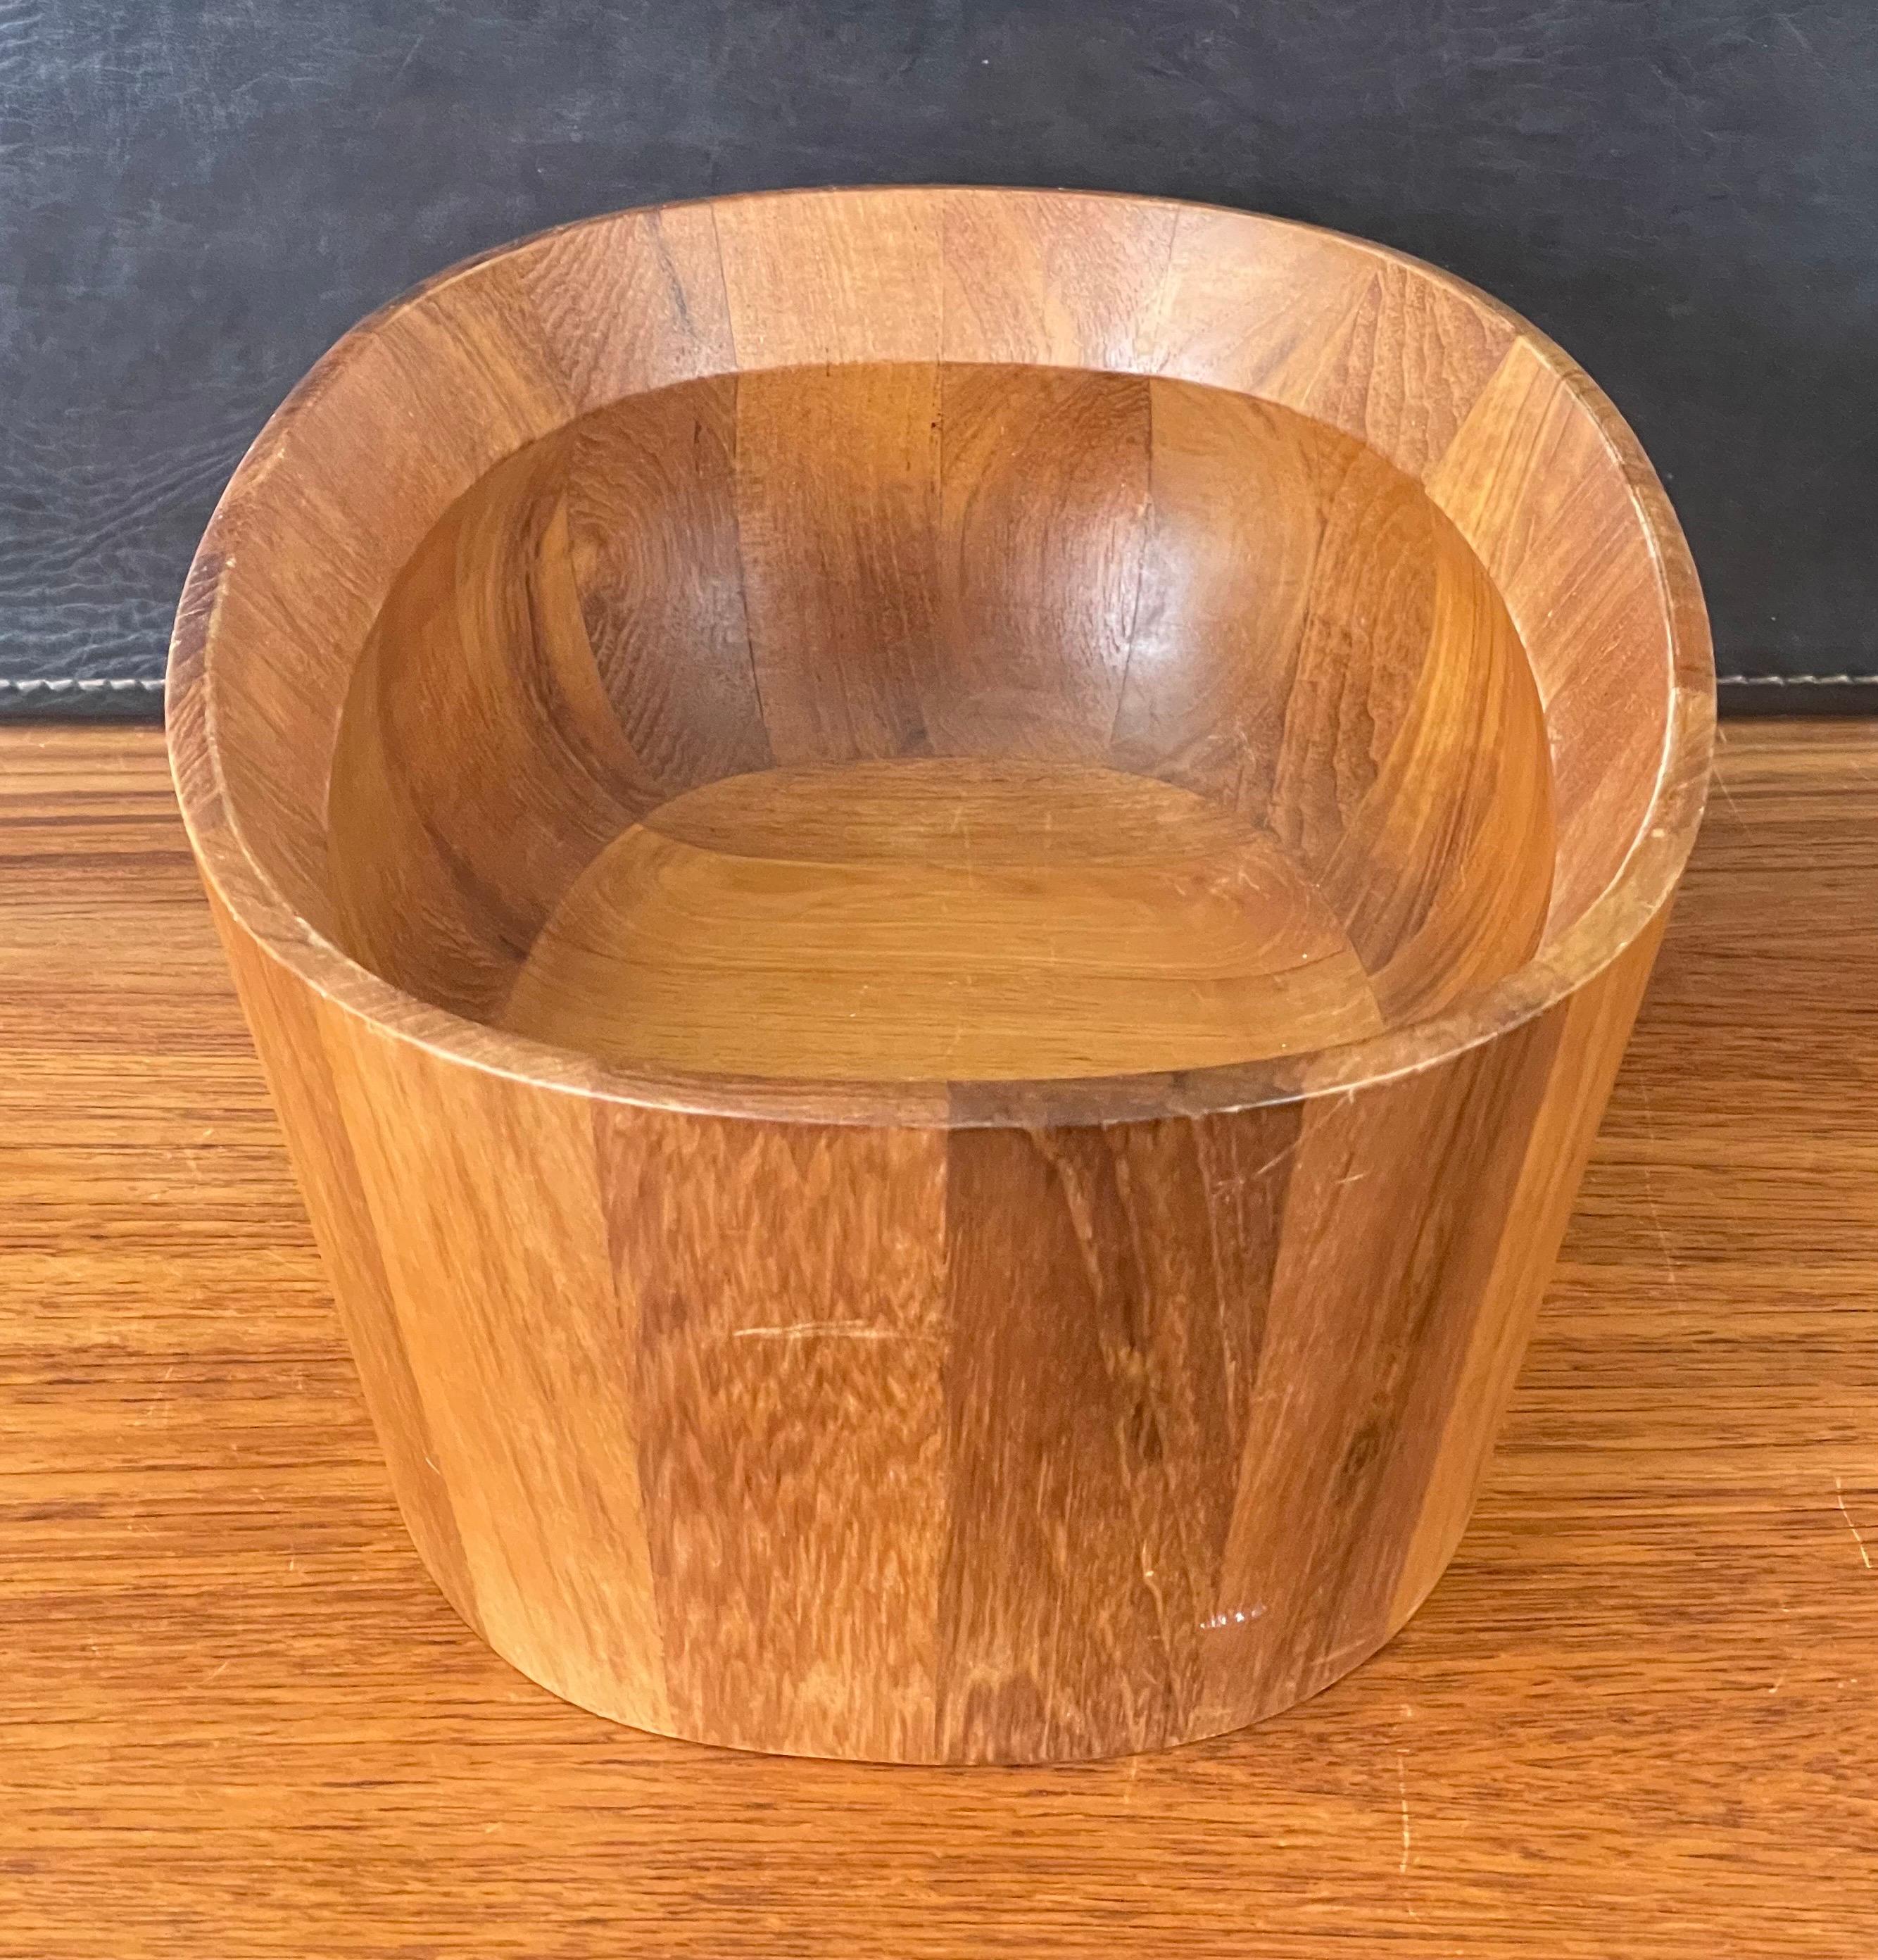 20th Century Danish Modern Oval Shaped Staved Teak Bowl by Jens Quistgaard for Dansk For Sale